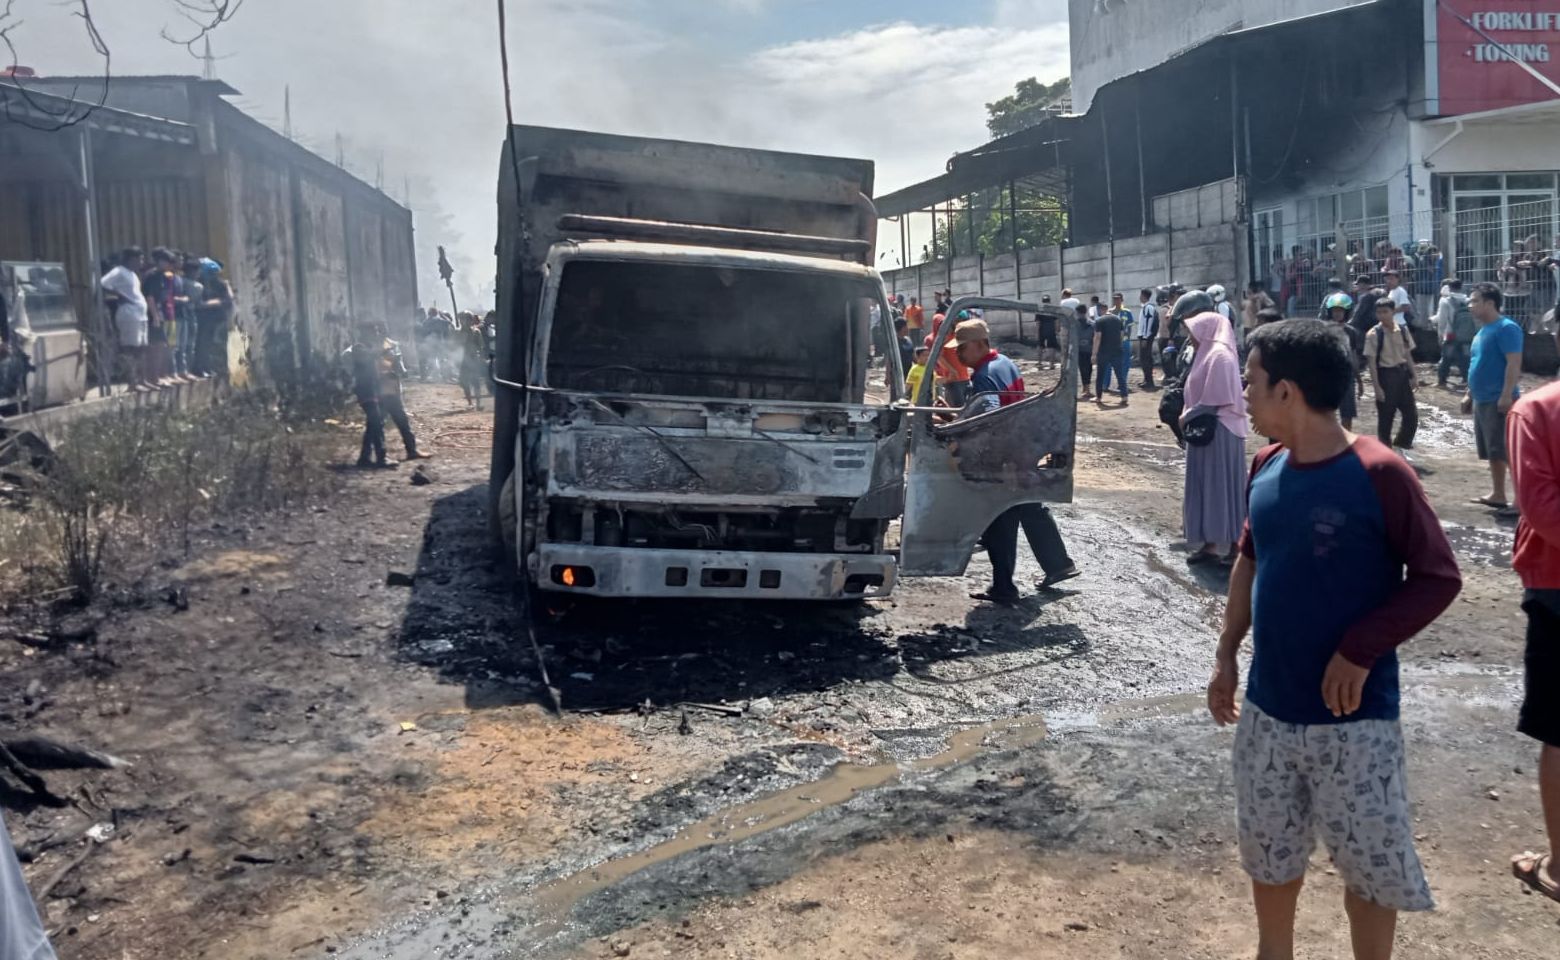 Gudang minyak Ilegal terbakar 3 unit truk dan 1 ruko hangus terbakar di Kota Jambi